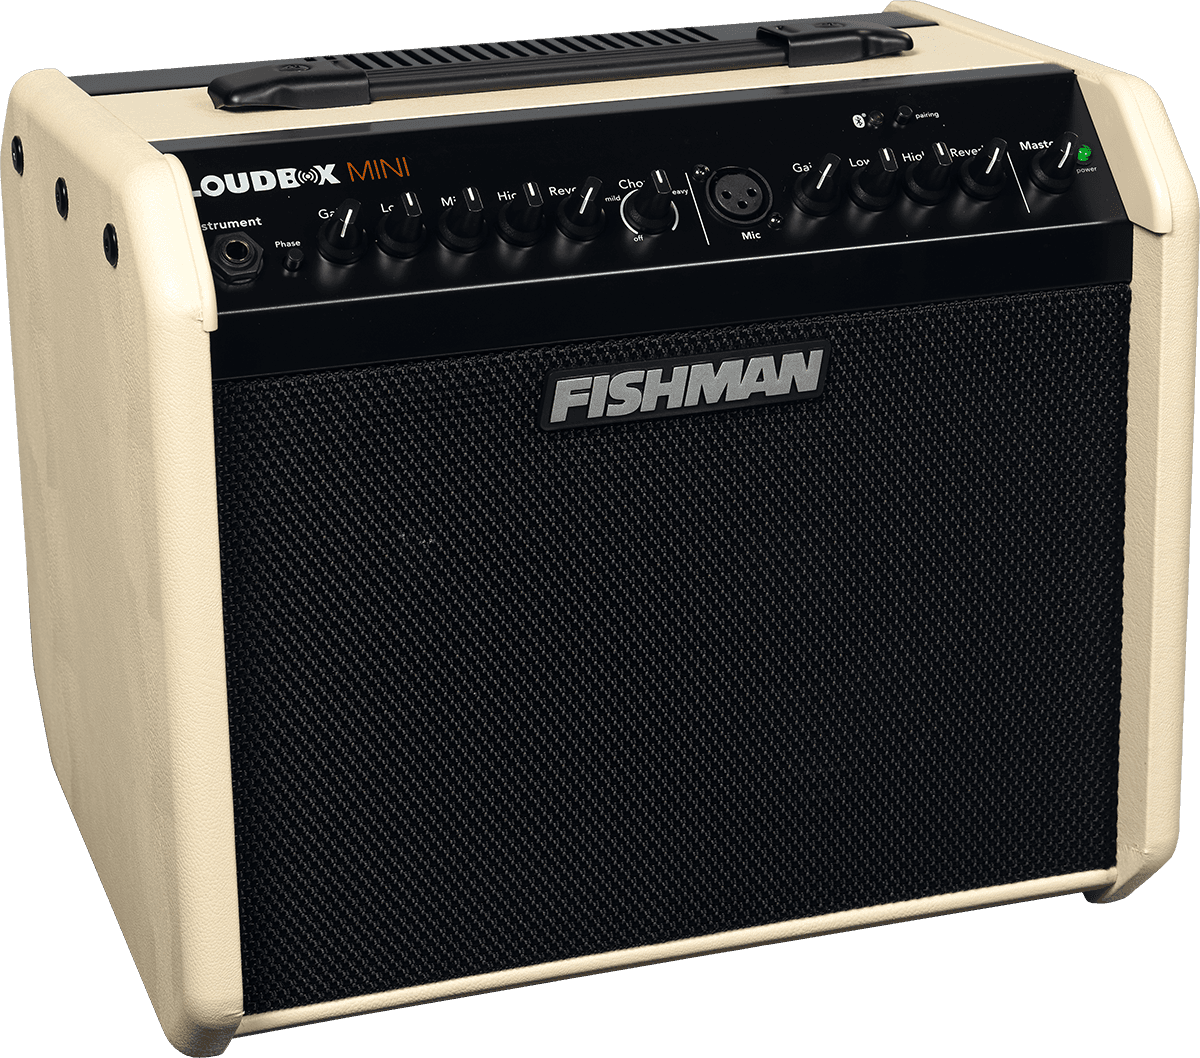 Fishman Loudbox Mini 60w Bluetooth - Cream - Mini acoustic guitar amp - Main picture